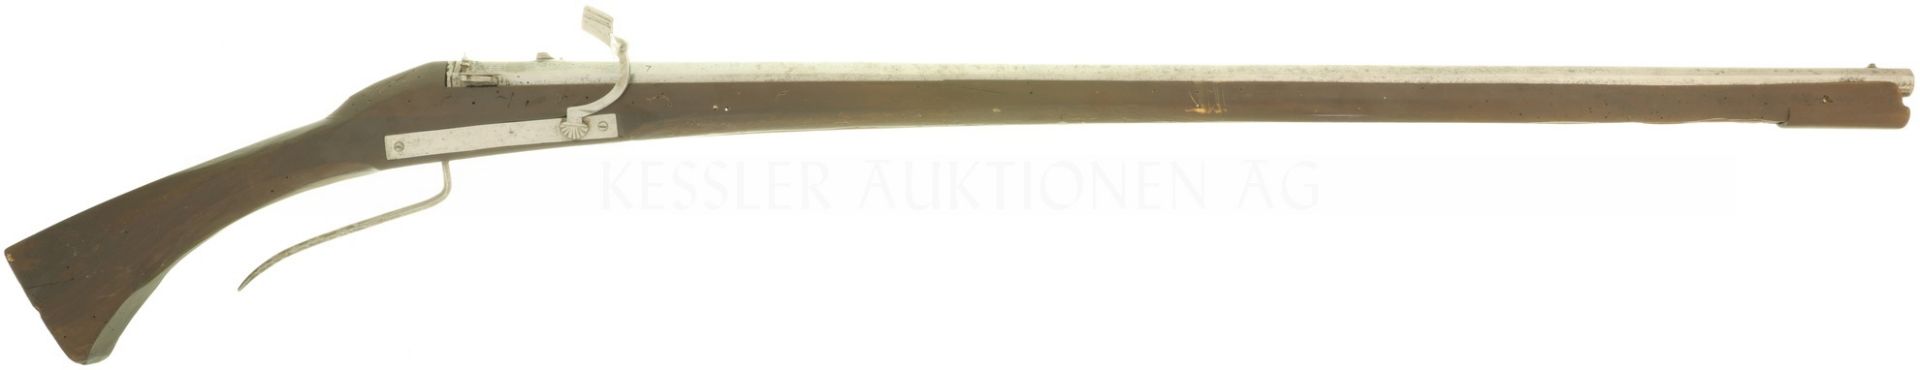 Luntenmuskete, Italien um 1600, Kal. 18.5mm